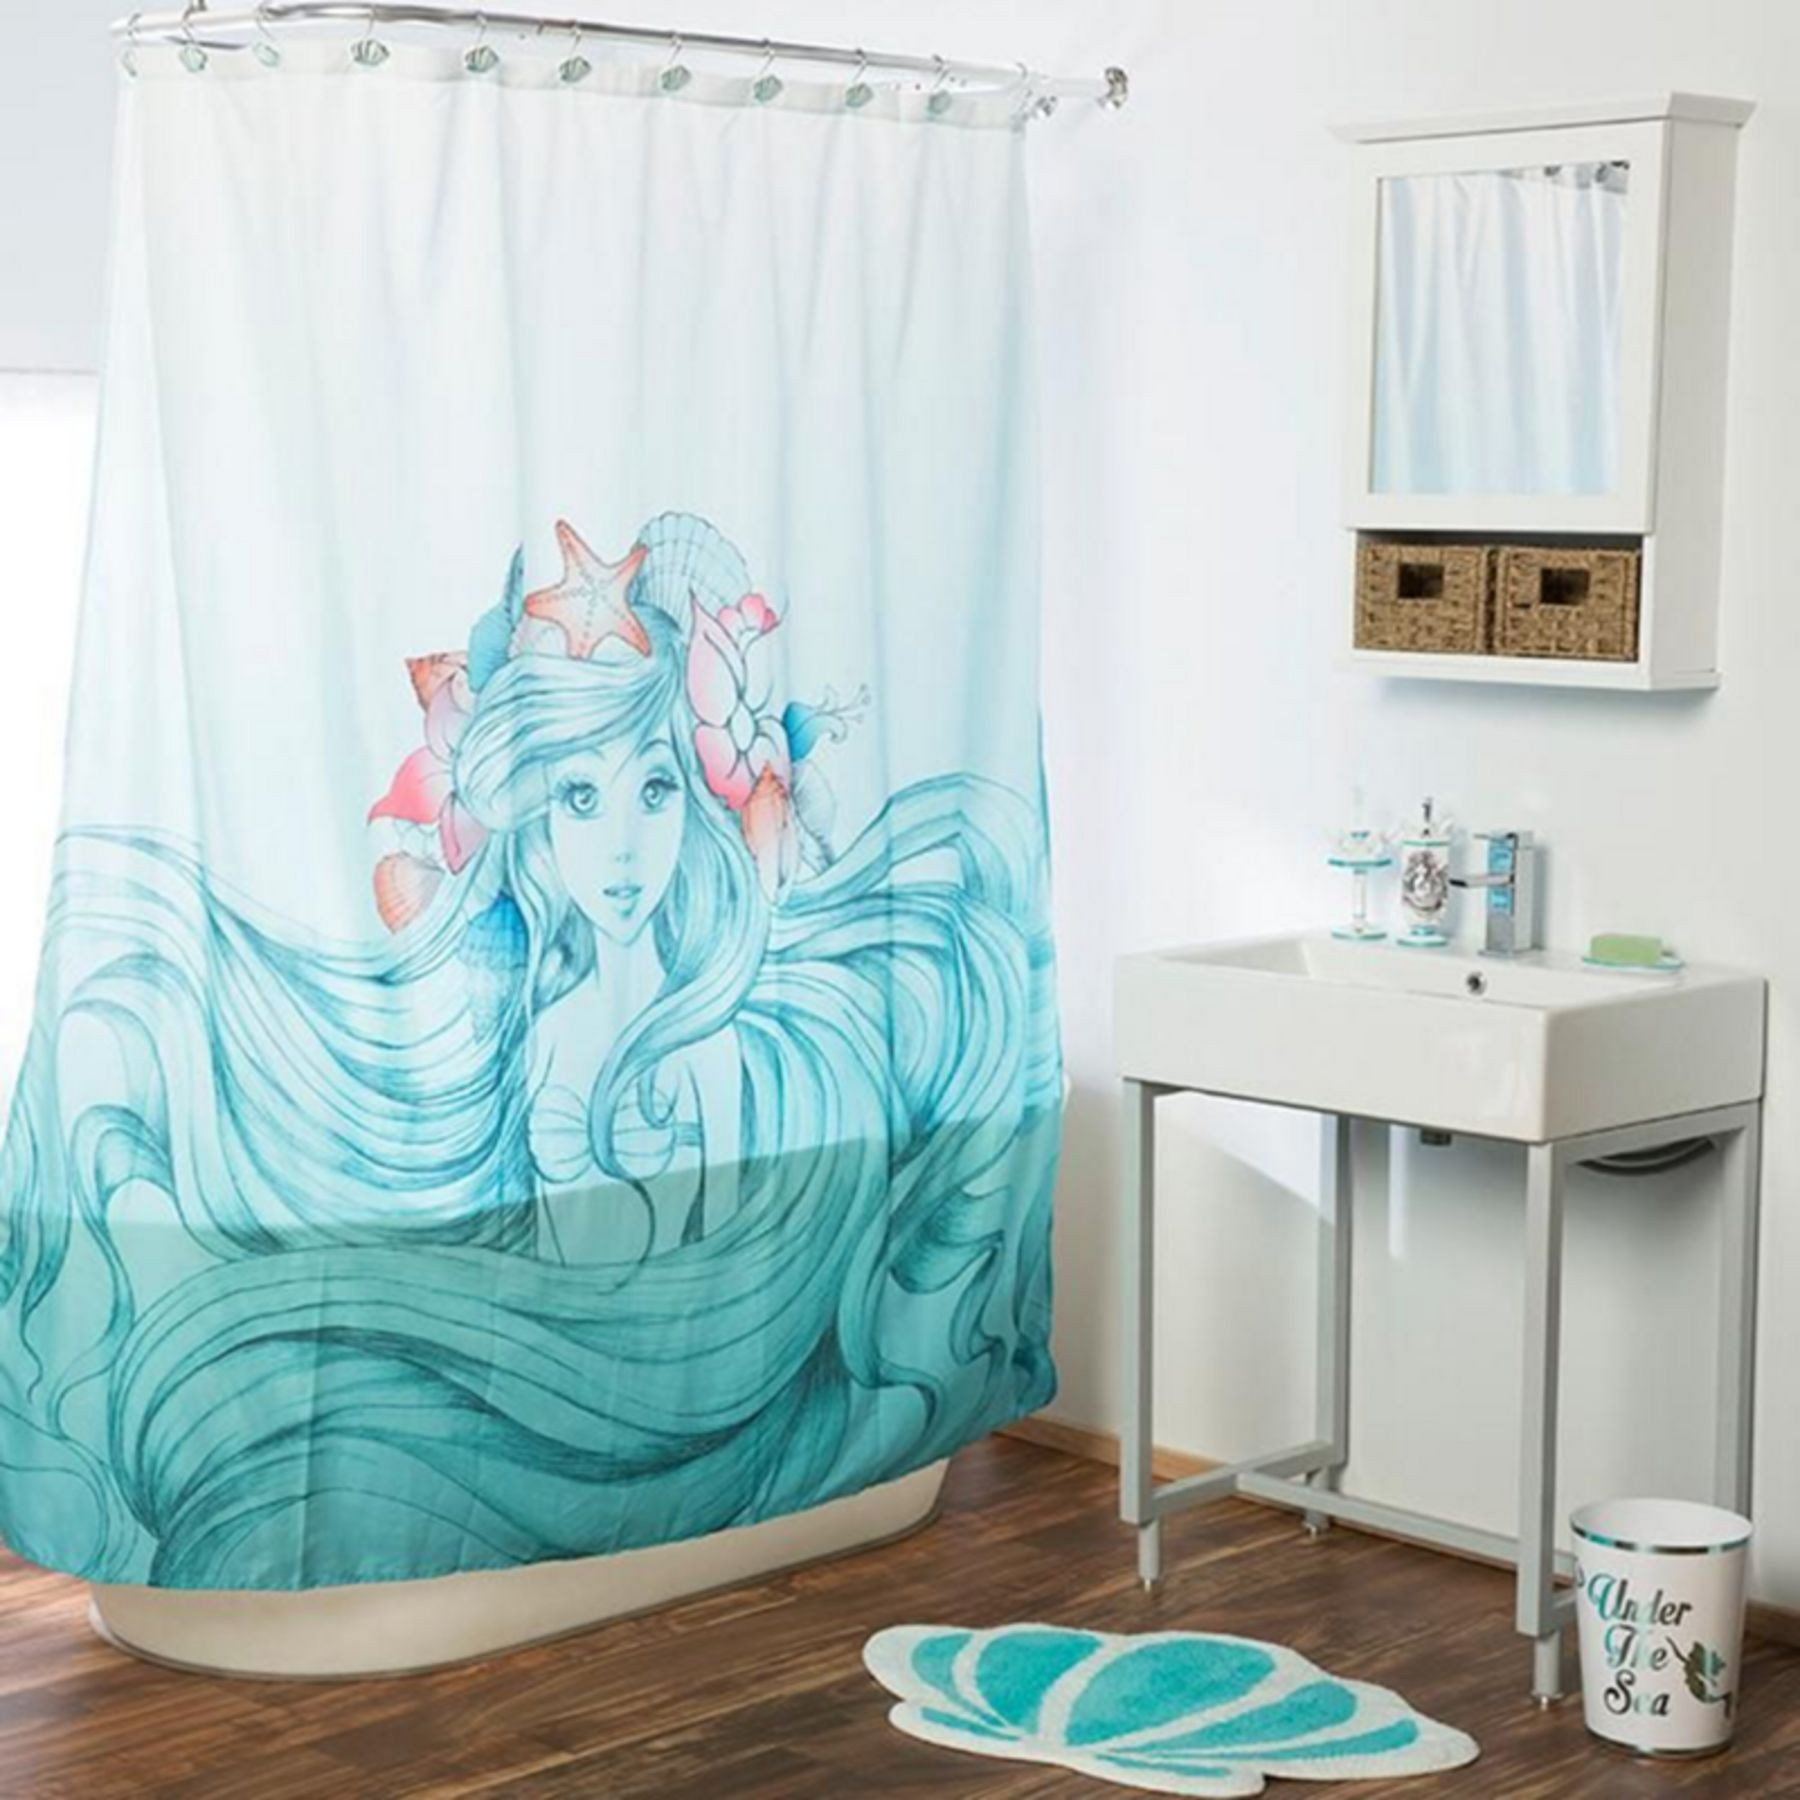 Mermaid Bathroom Decor
 10 Charming Bathroom Decorating Ideas With DIY Mermaid